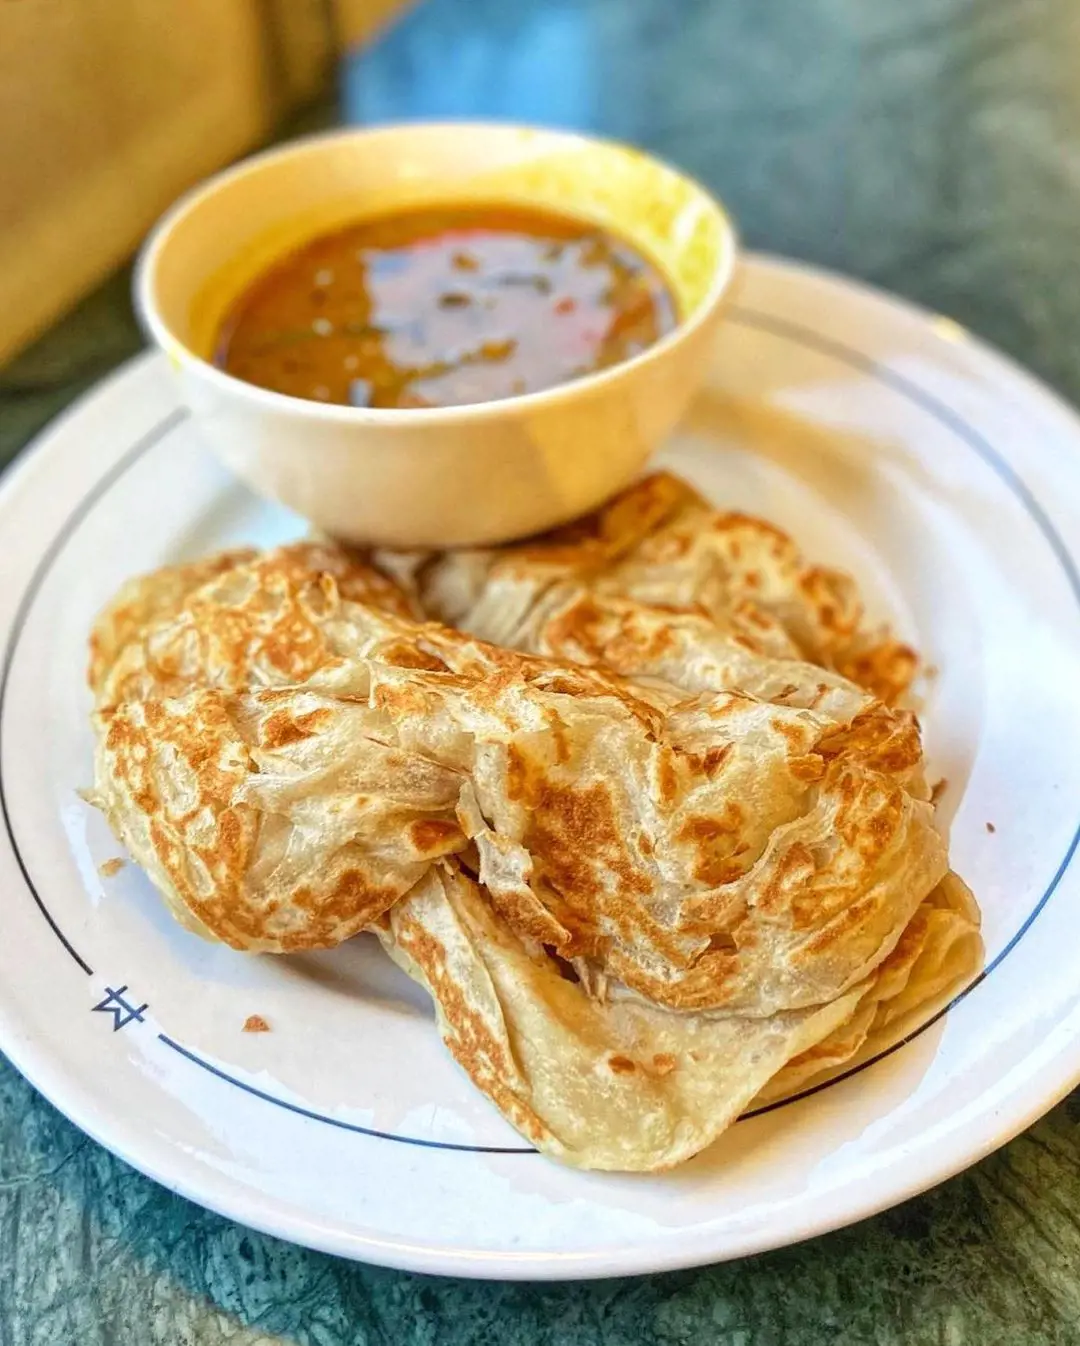 Roti canai served with “Sambar”, a lentil and veg stew.